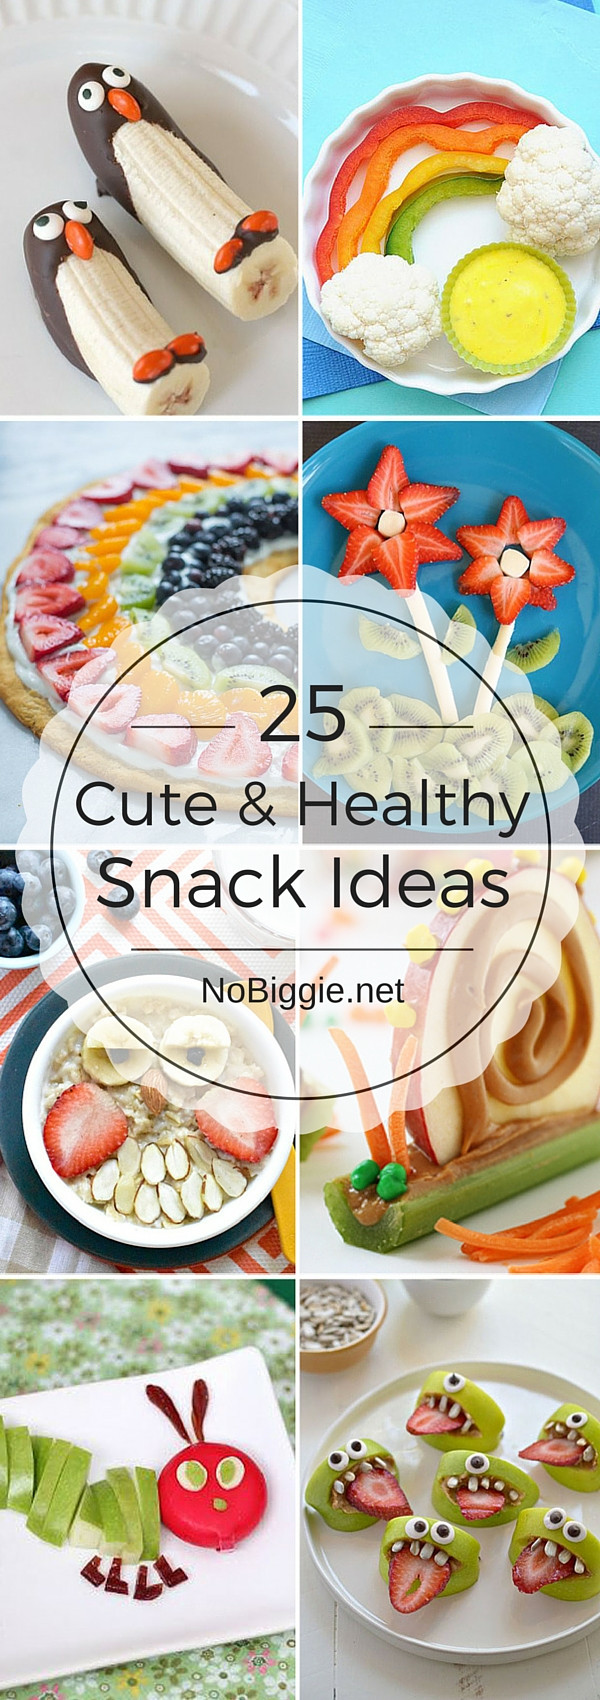 Cute Healthy Snacks
 25 Cute and Healthy Snack Ideas